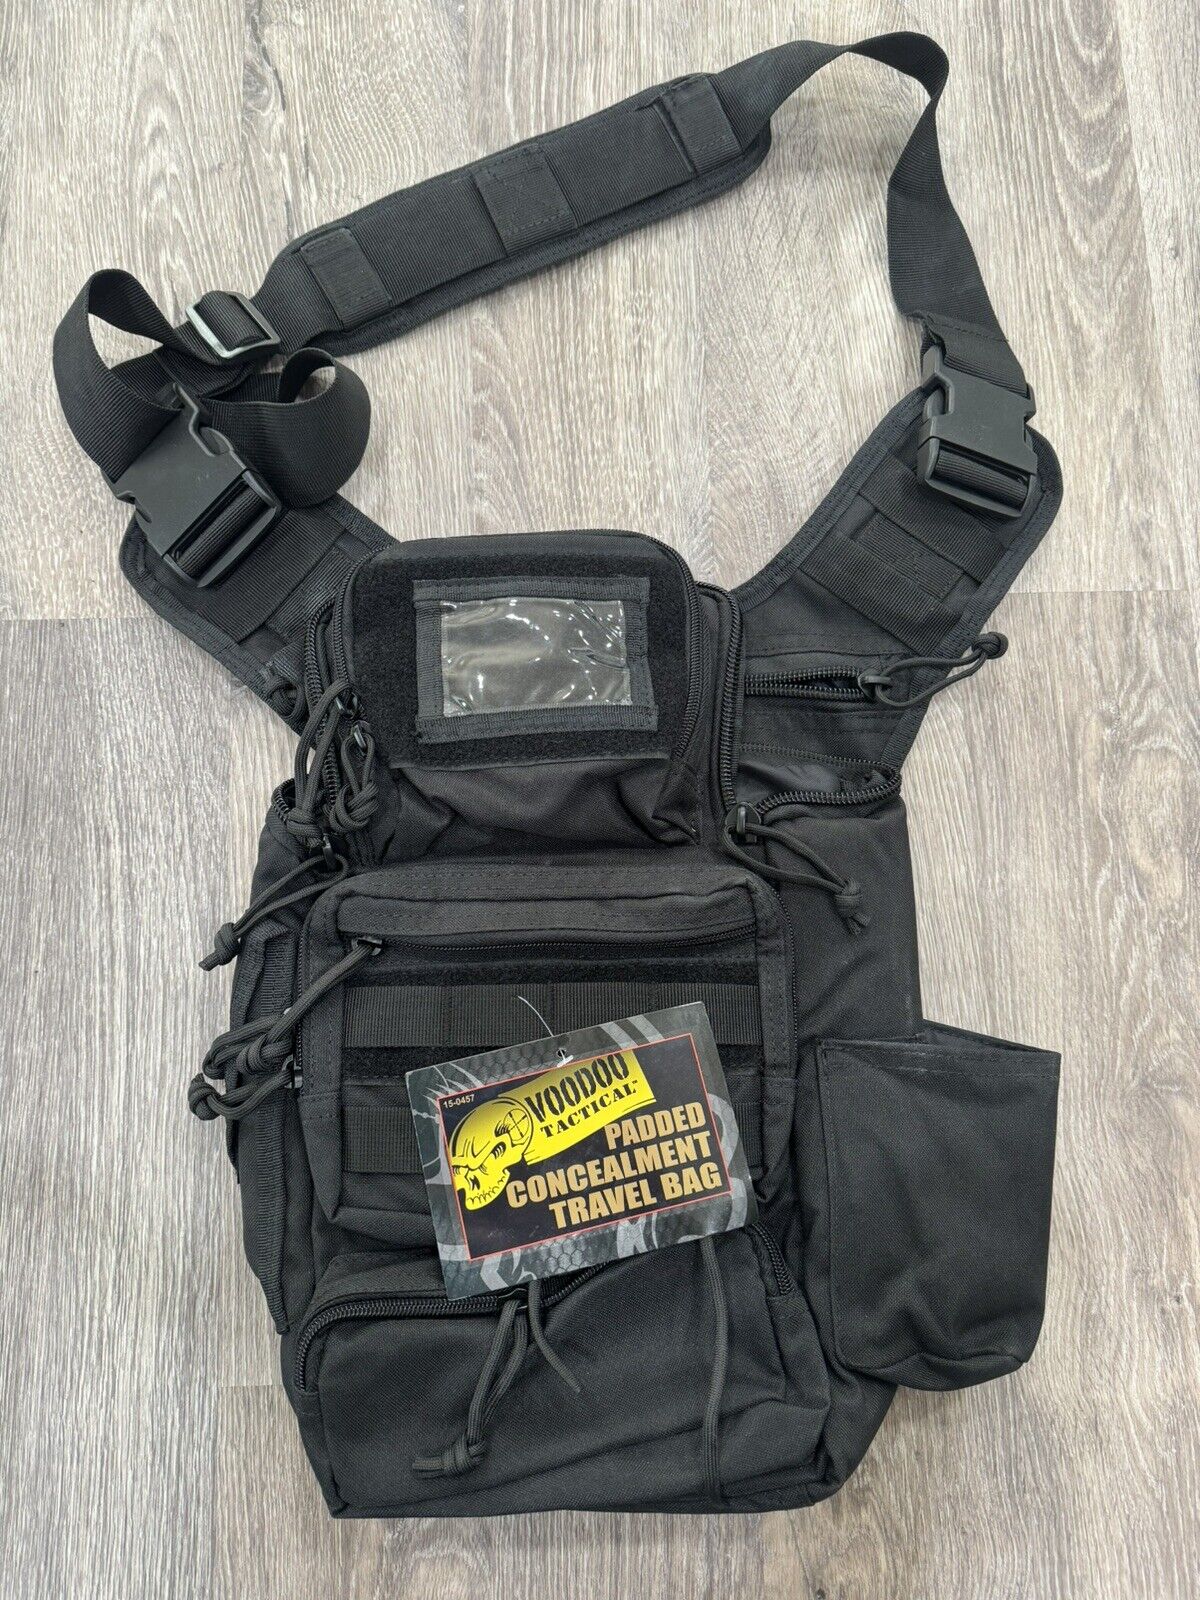 Voodoo Tactical Padded Concealment Travel Sling Bag